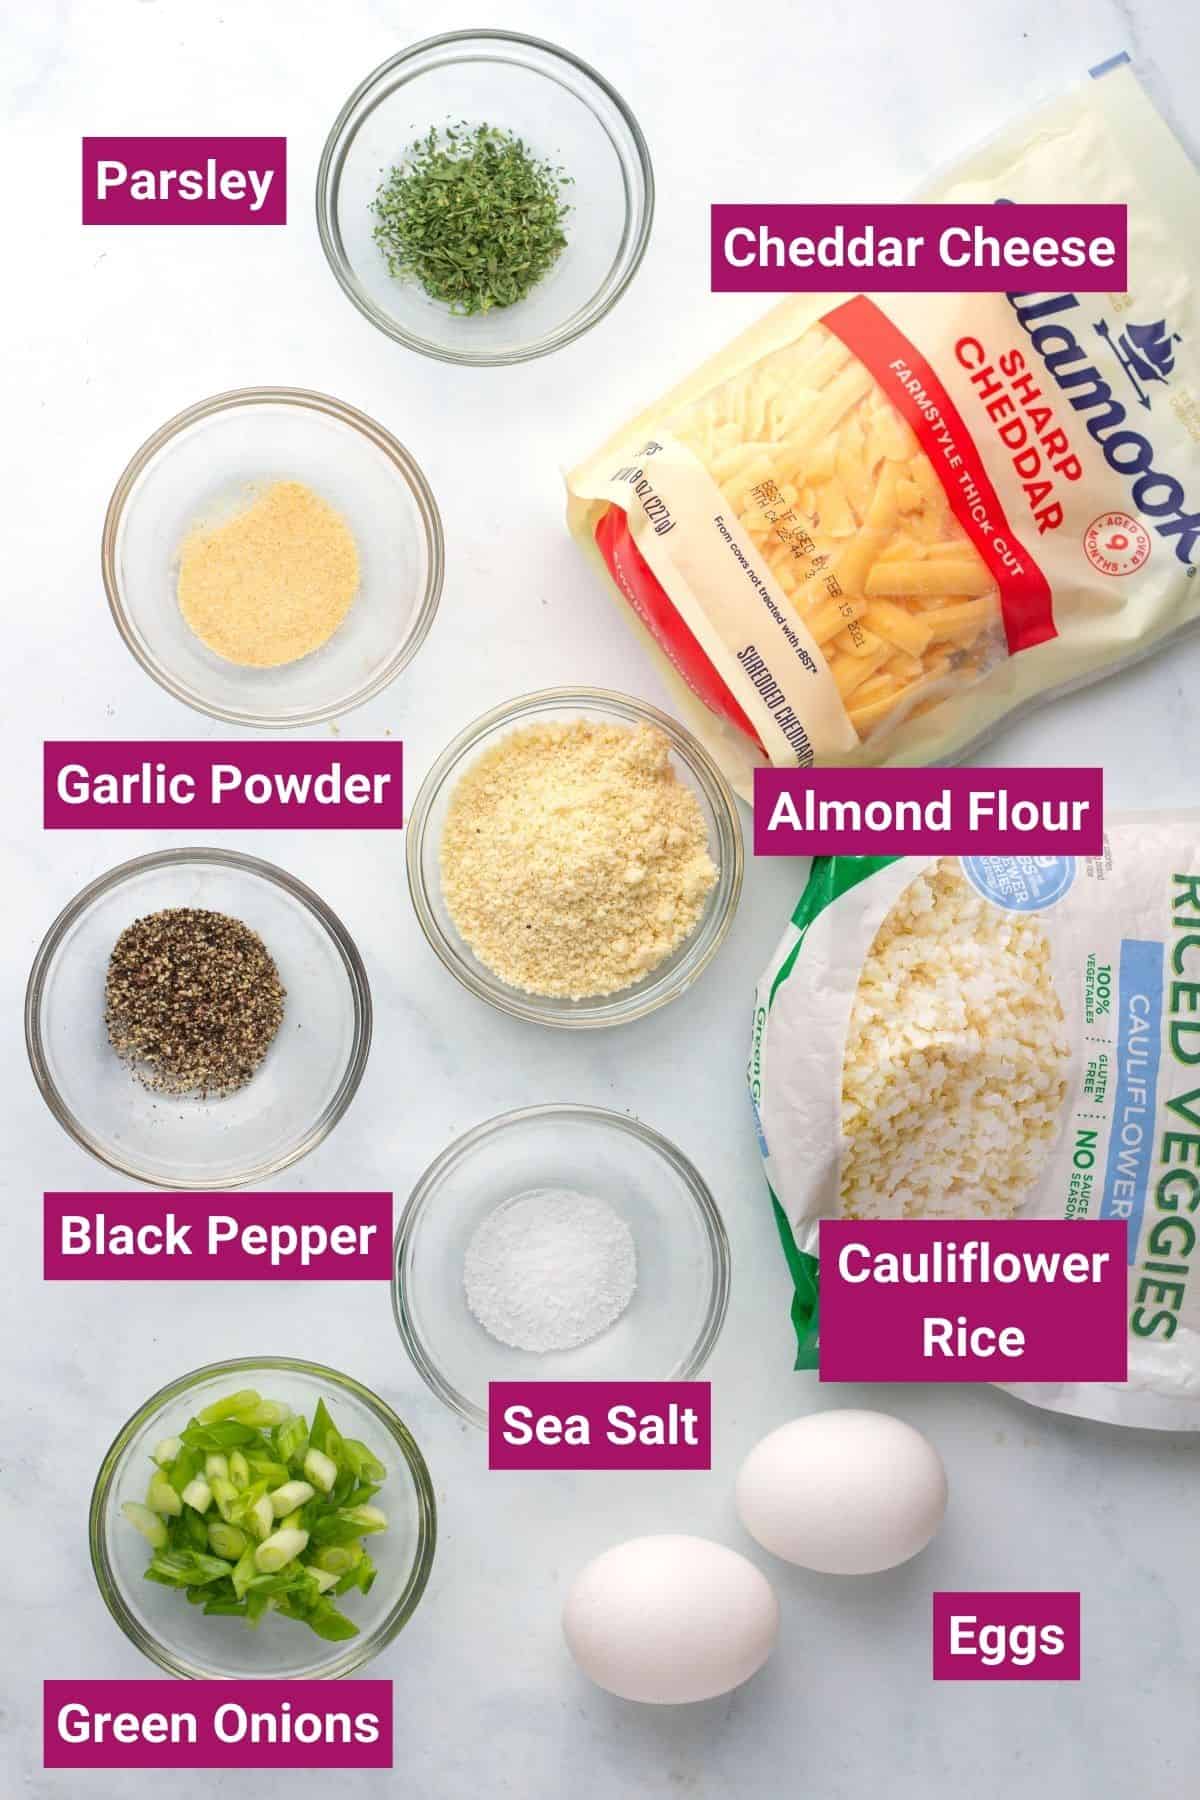 ingredients needed to make keto hash browns like cheddar cheese, parsley, almond flour, garlic powder, black pepper, sea salt, green onions, eggs and cauliflower rice